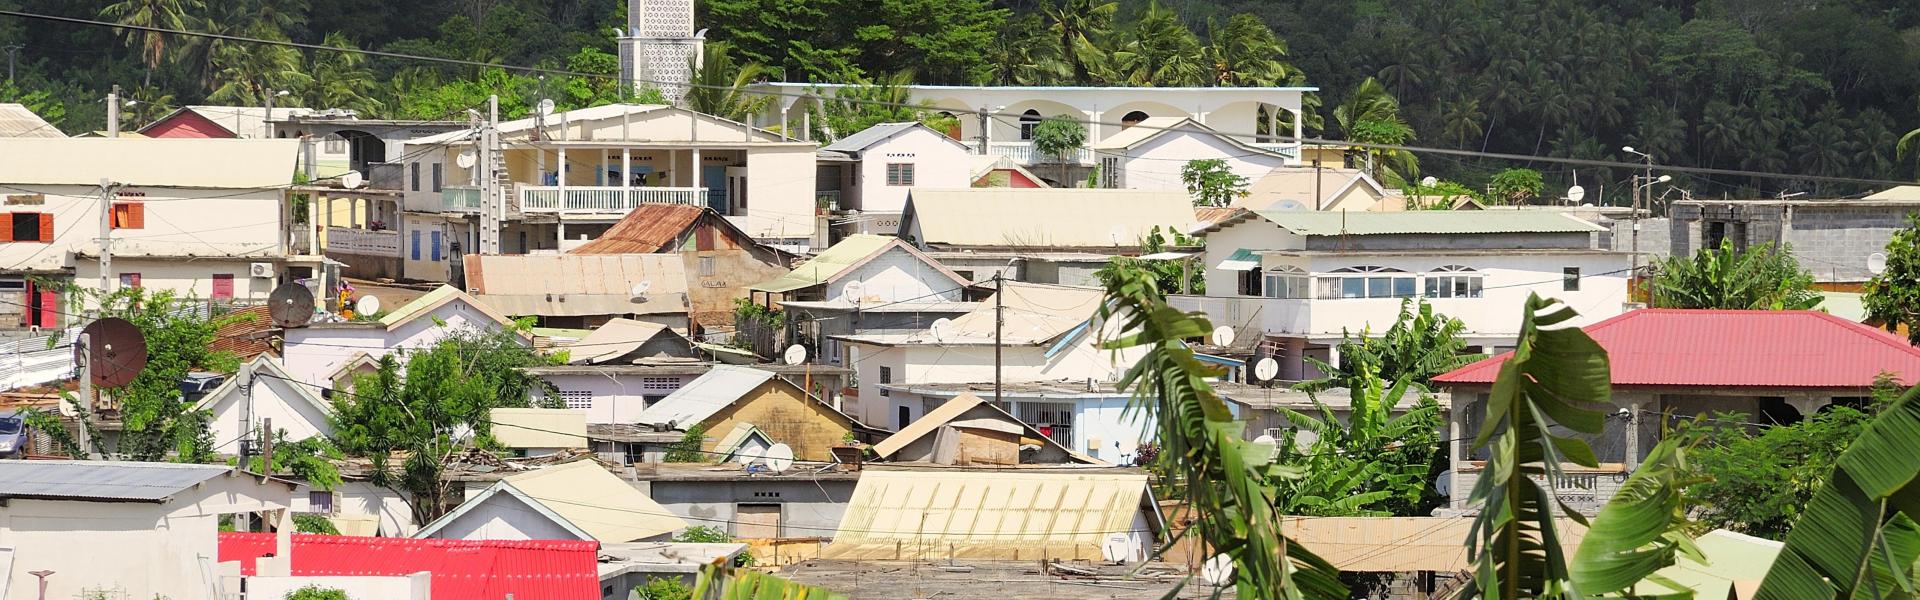 Locations de vacances et chambres d'hôtes à Mayotte - HomeToGo